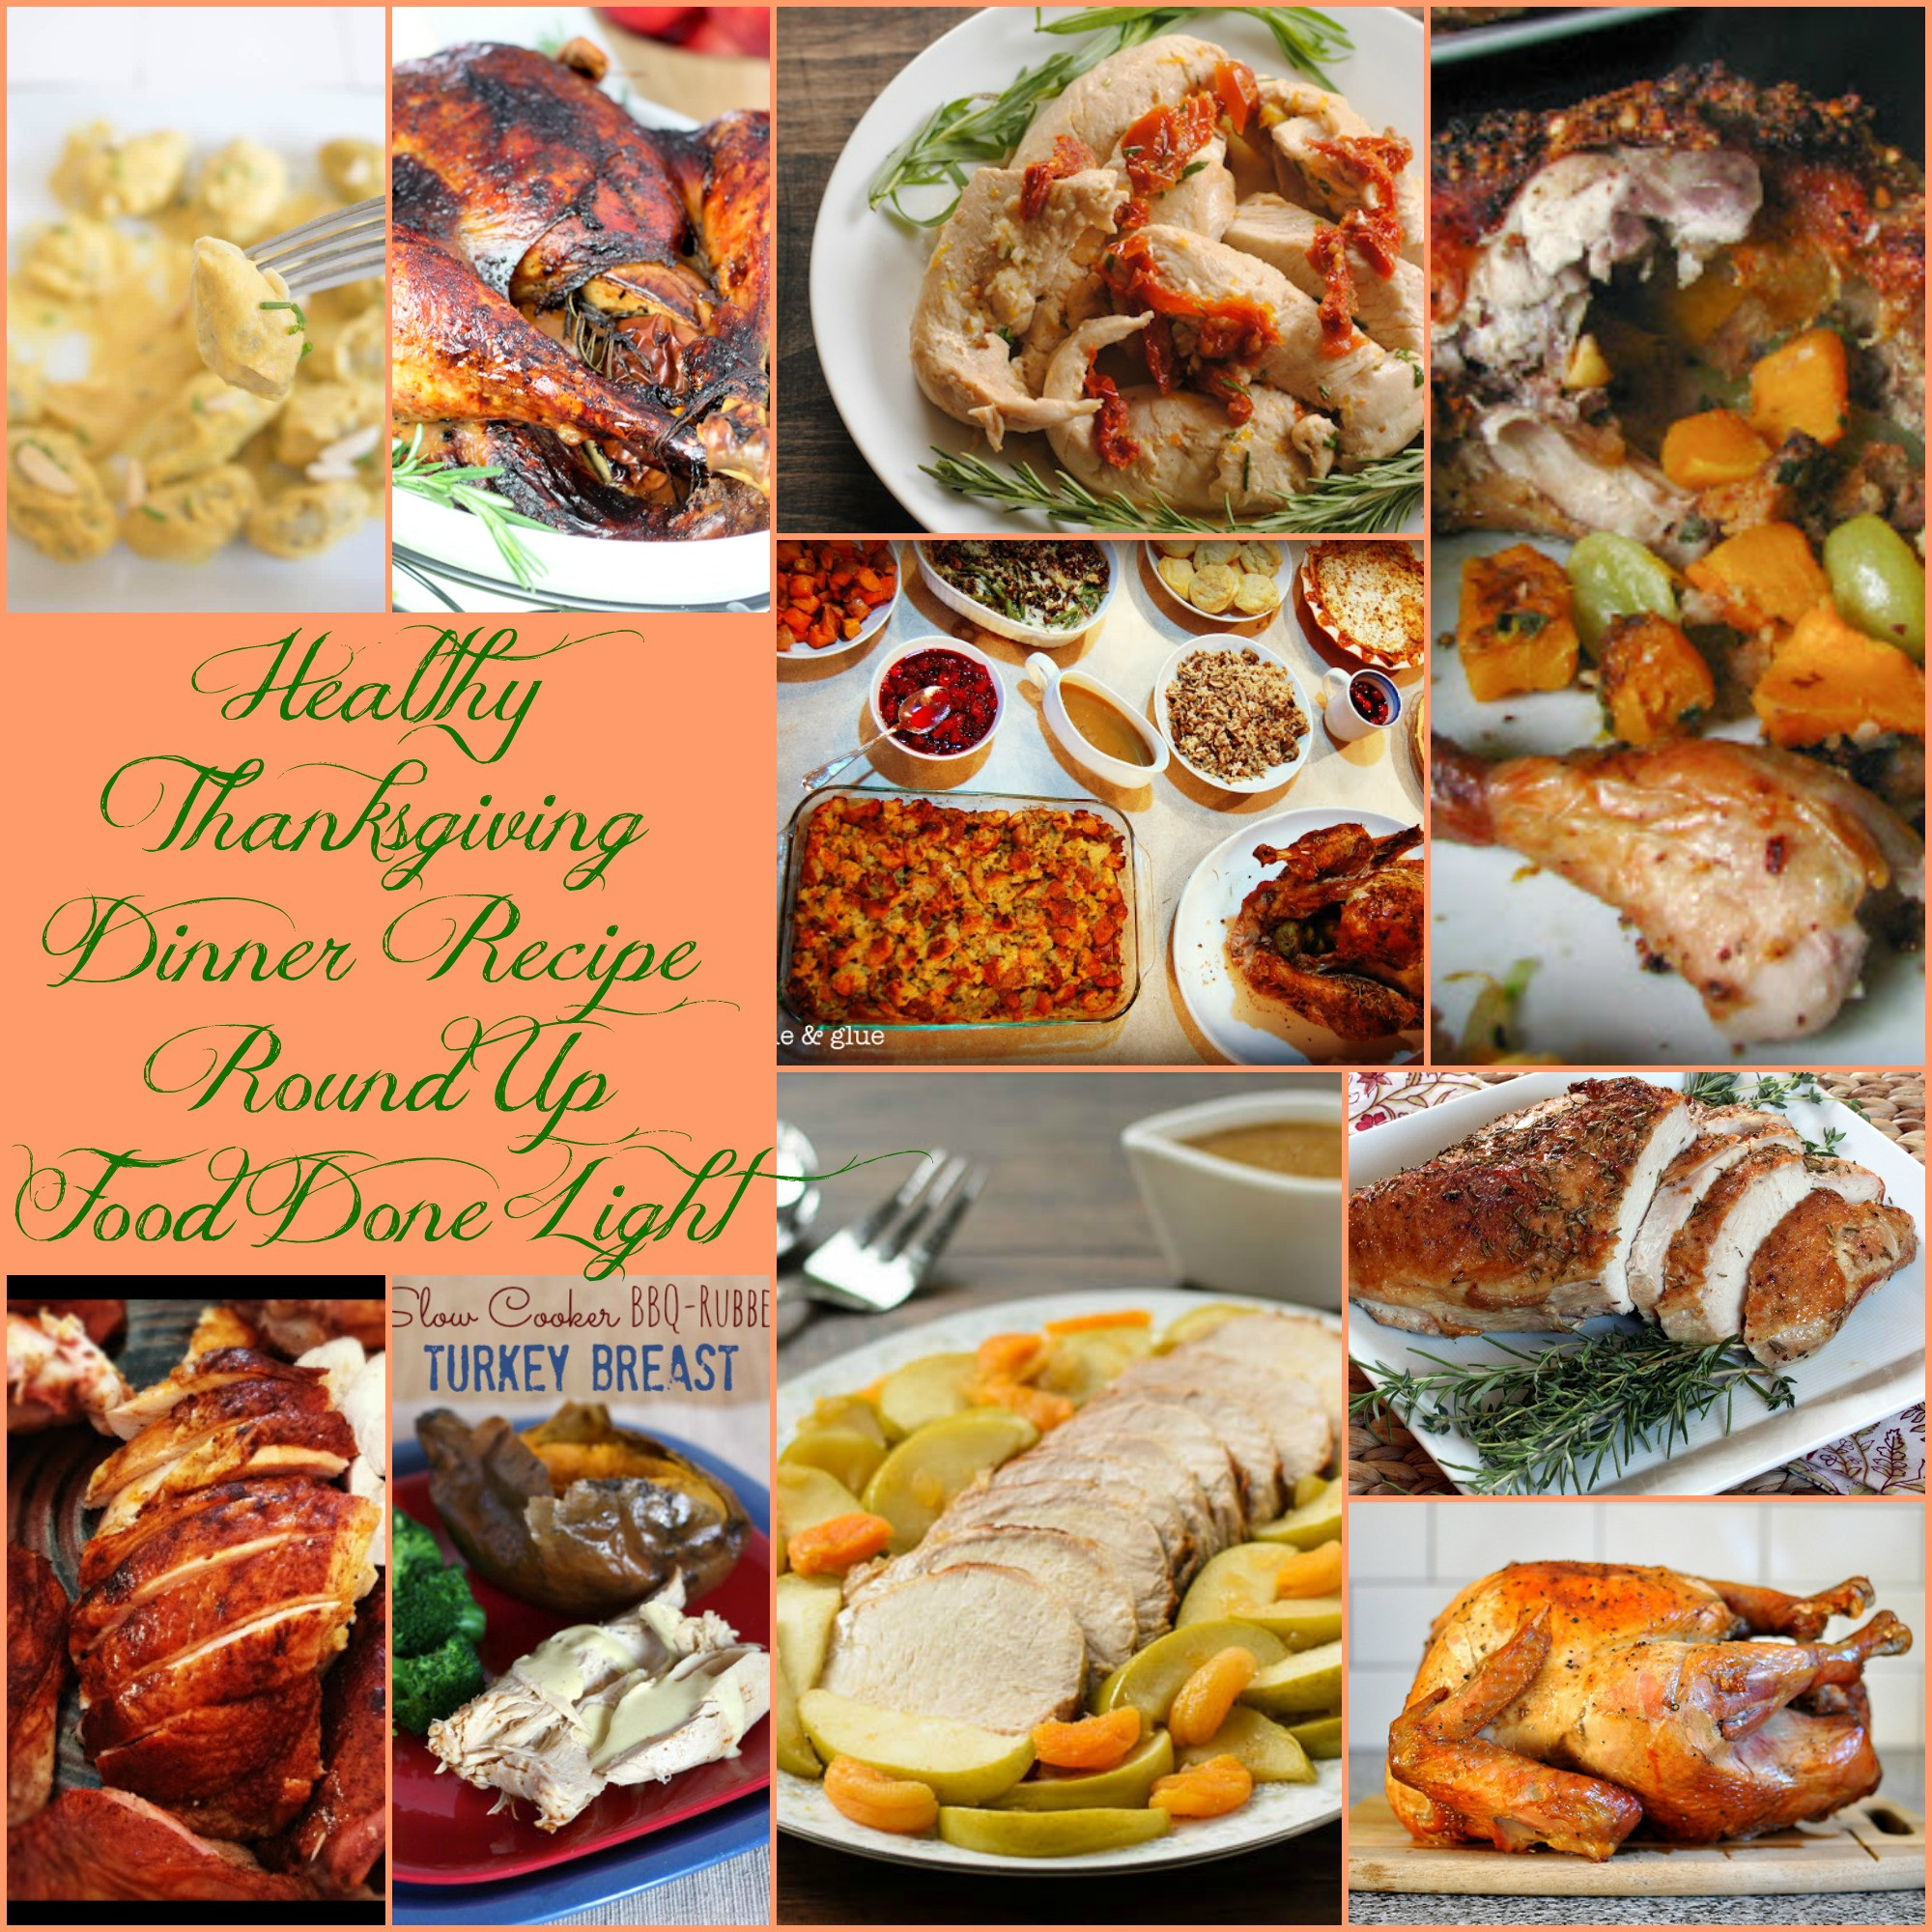 Turkey Recipe For Thanksgiving Dinner
 Healthy Thanksgiving Turkey Recipe Round Up Food Done Light